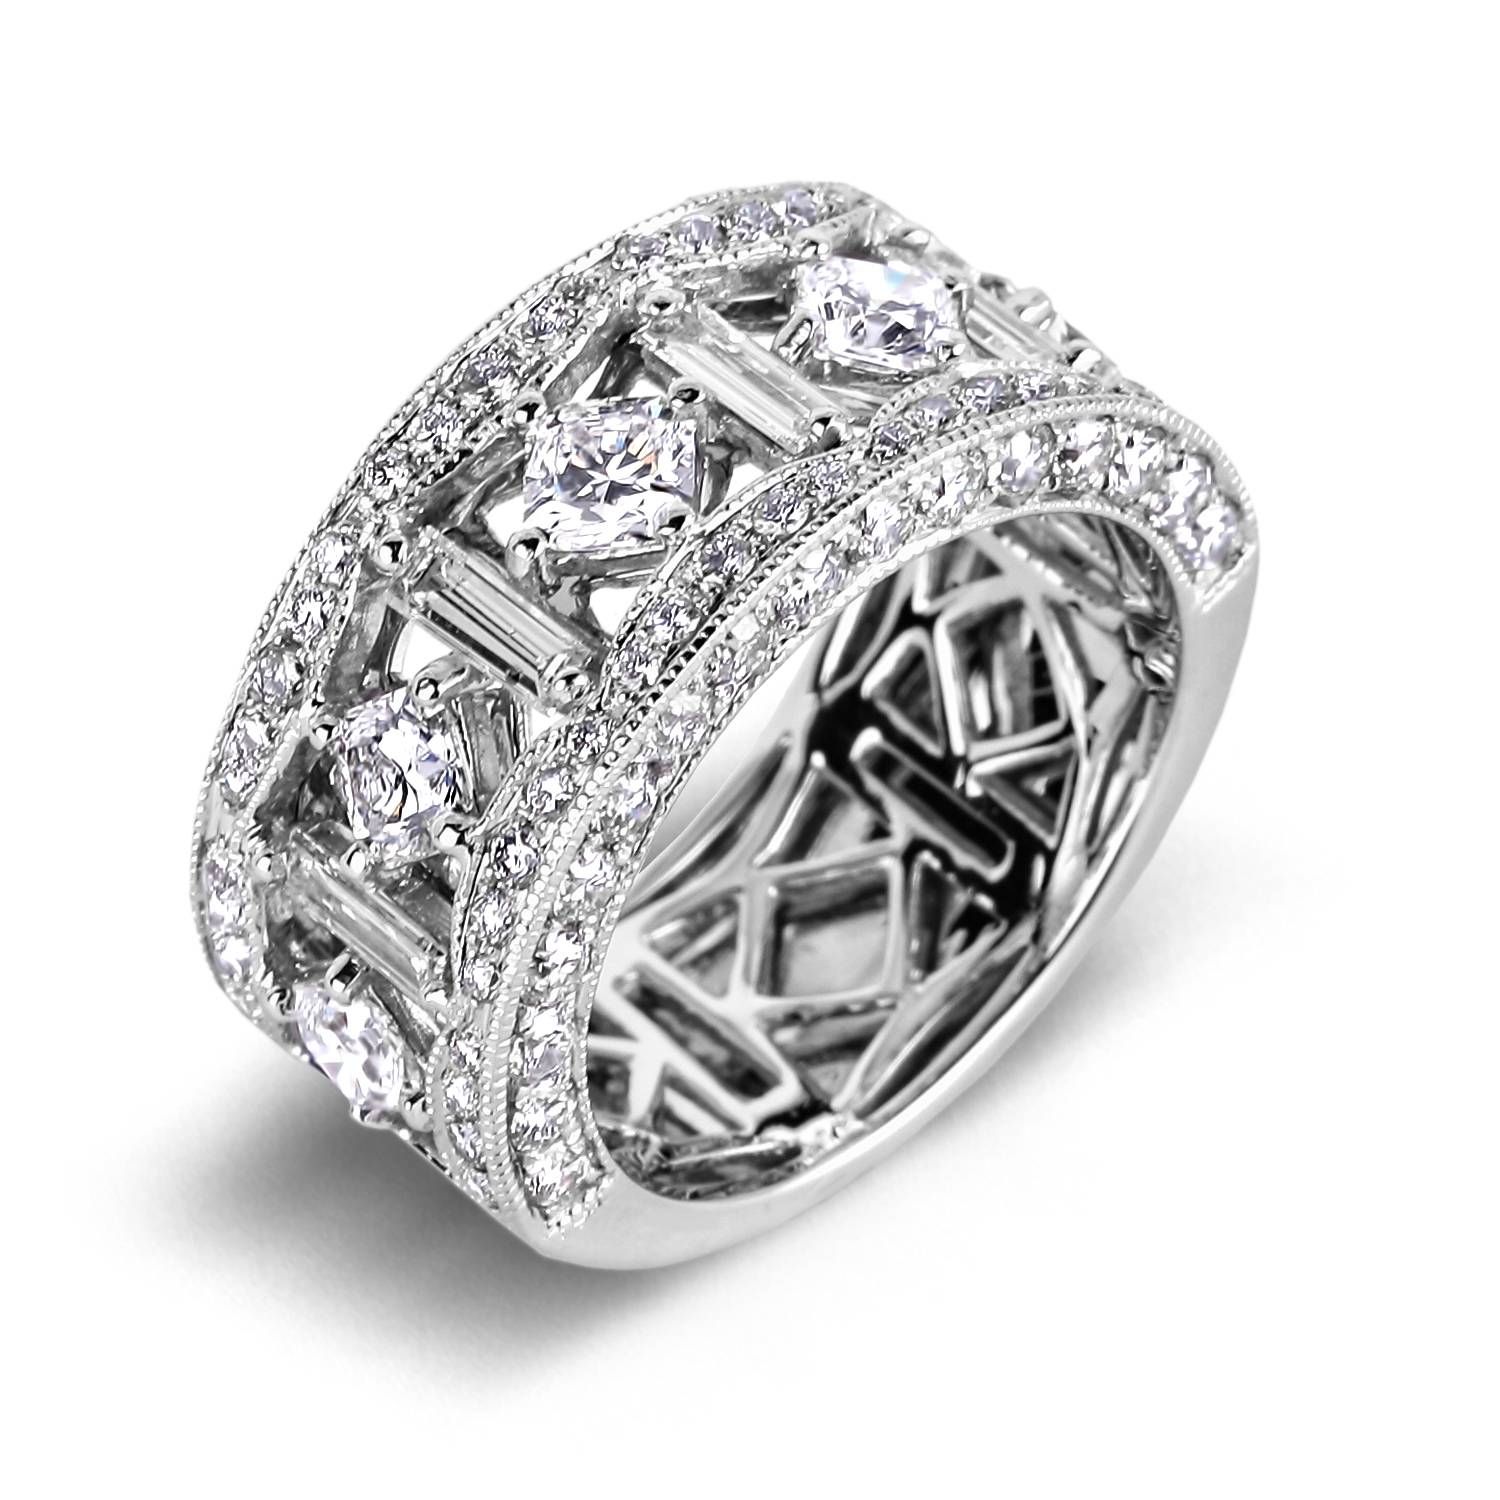 Wedding Anniversary Rings Diamonds | Wedding Ideas Regarding 2017 Diamonds Wedding Anniversary Rings (View 6 of 25)